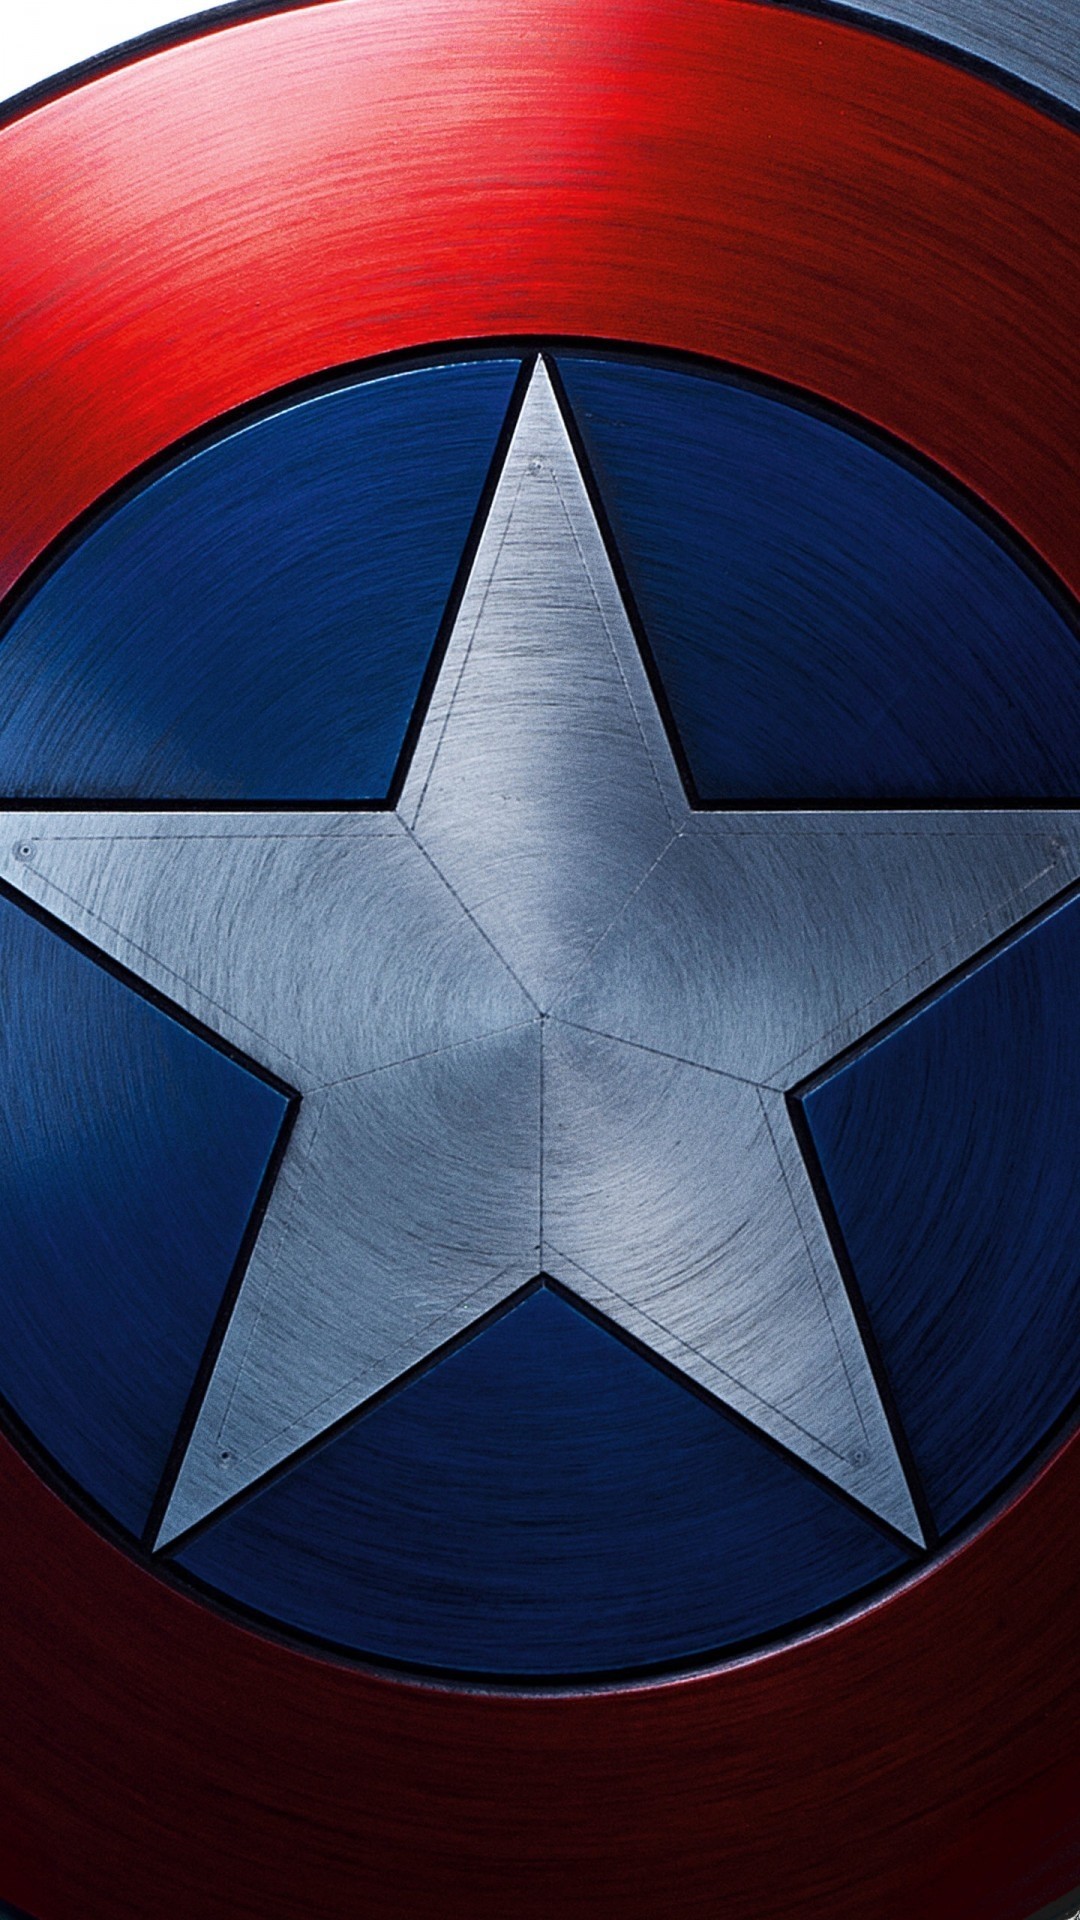 1080x1920 Captain America Iphone Wallpaper captain america civil war shield wallpaper  background  ...